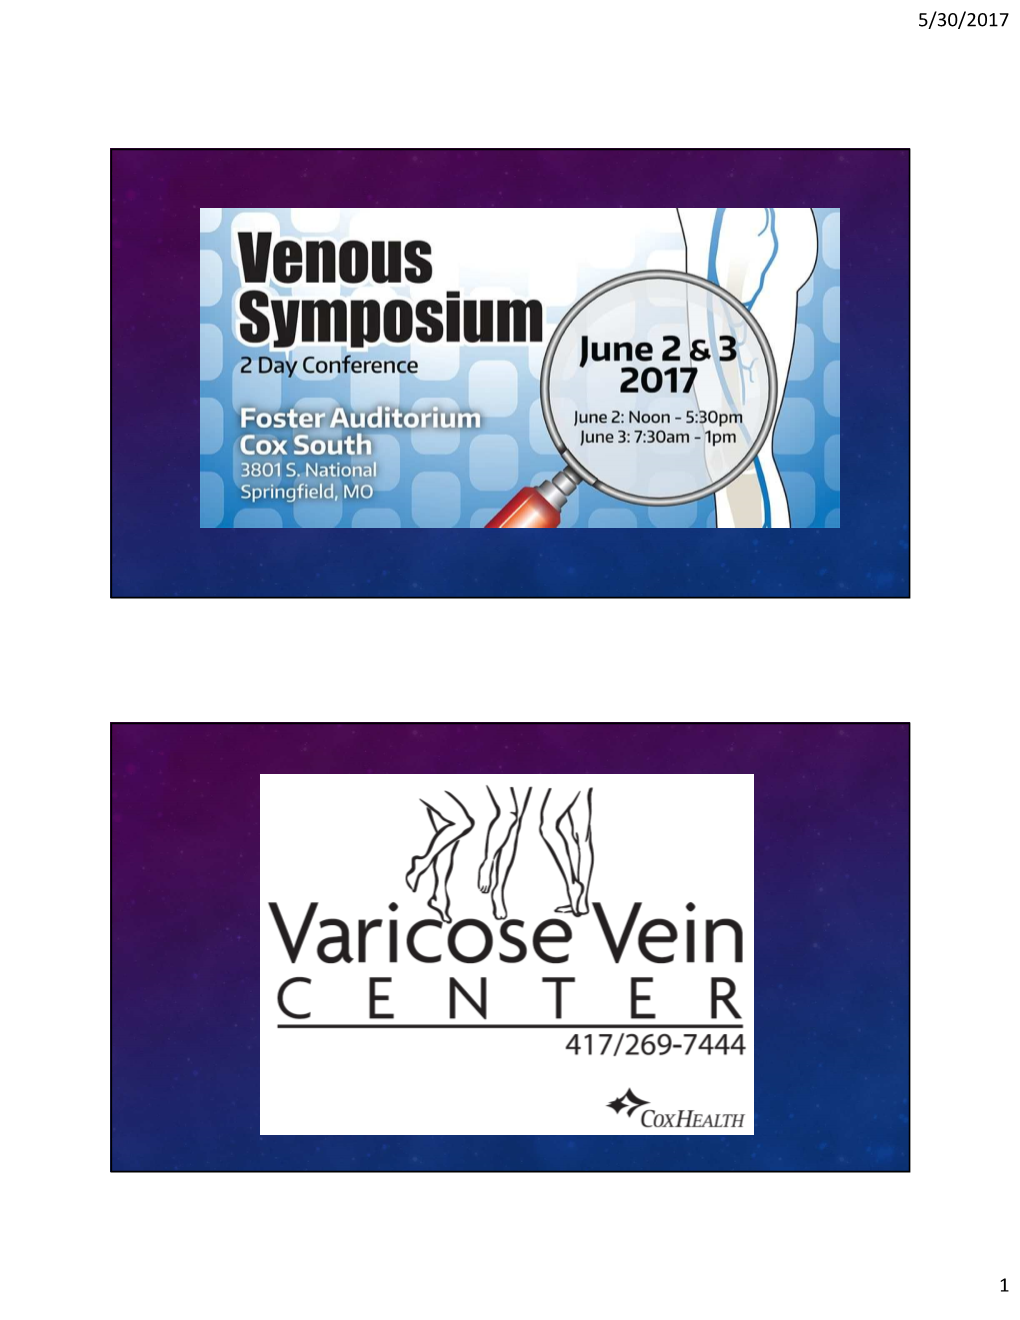 Venous Symposium: Overview